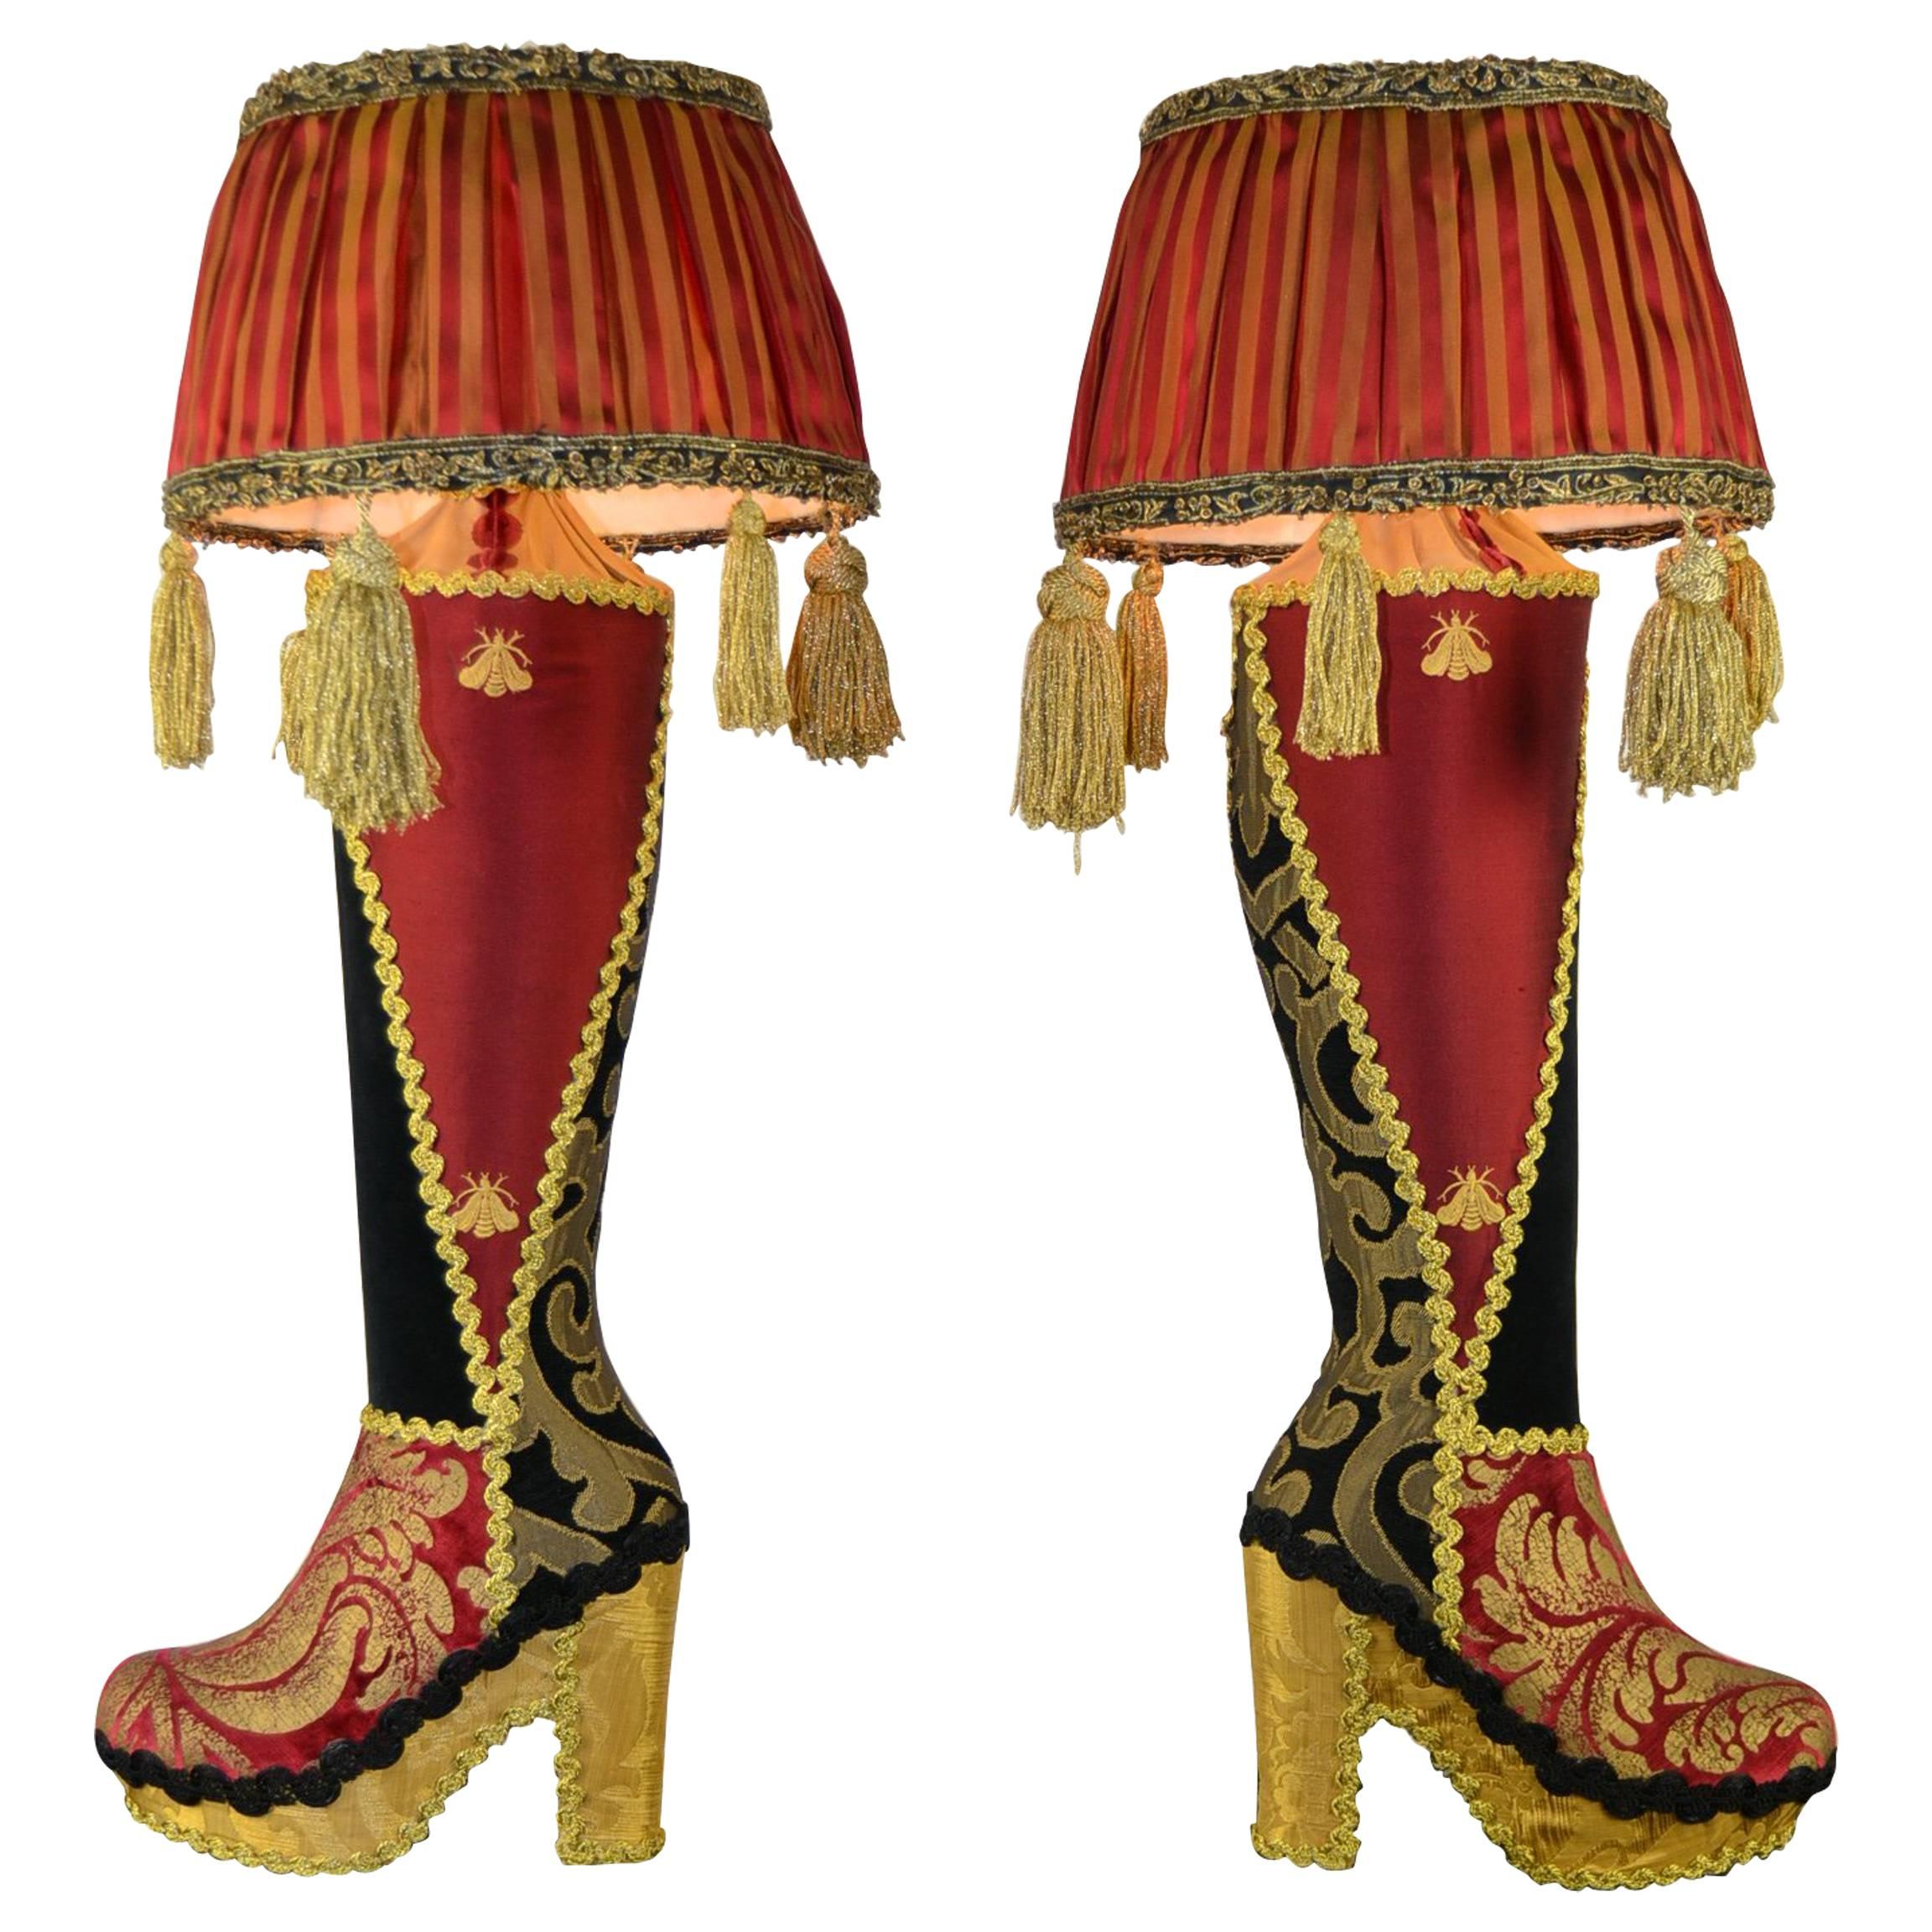 Handmade High Heel Boots Table Lamps